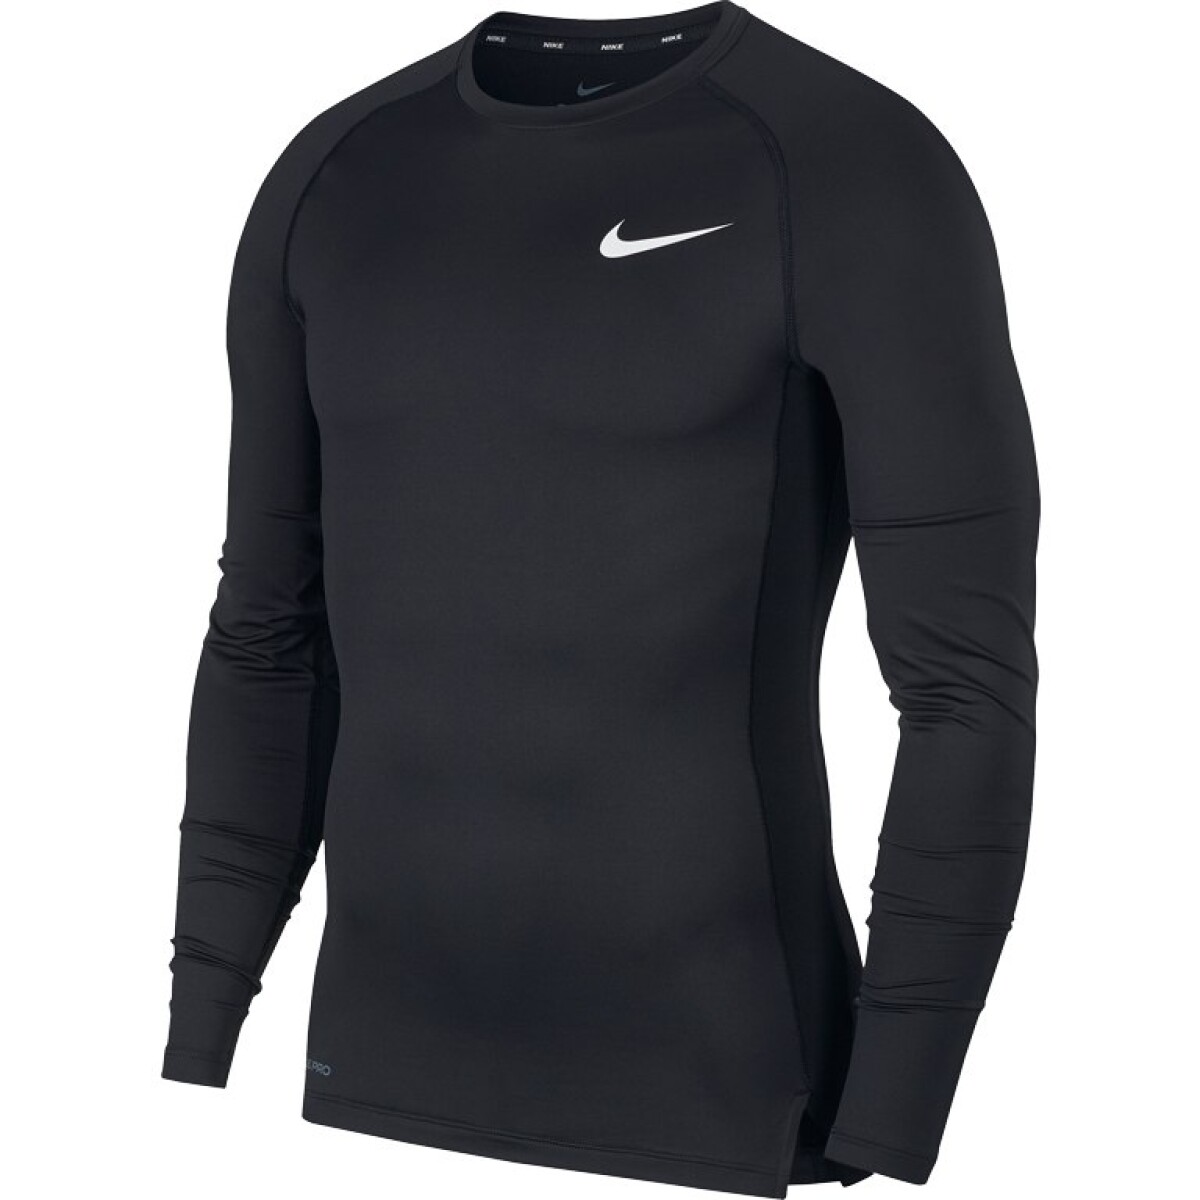 Remera Nike Training Hombre Top LS Tight Black/(White) - Color Único 